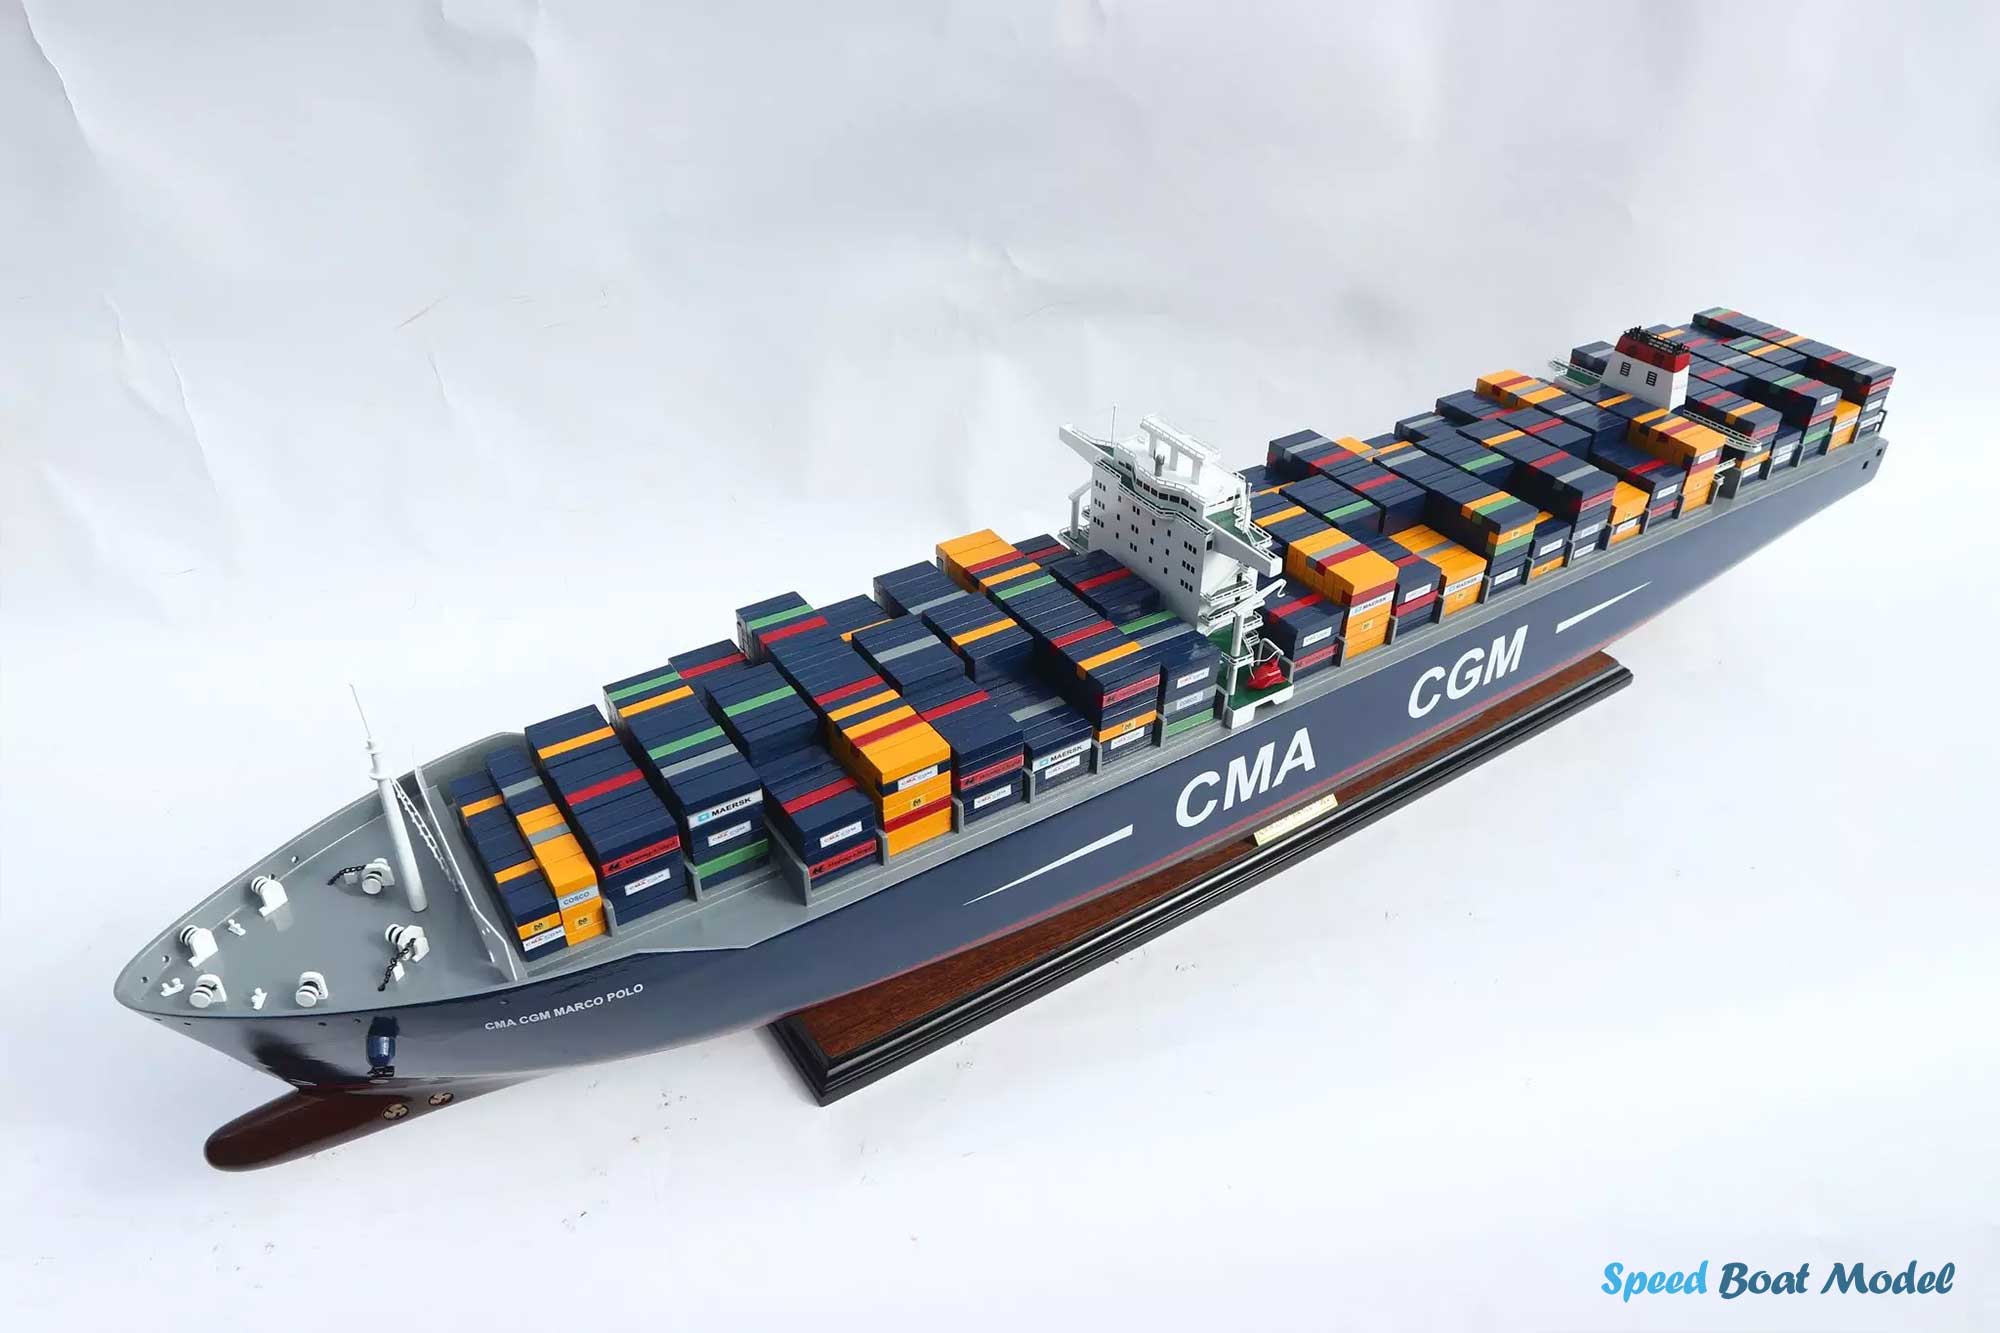 Cma-cgm-marco-polo-commercial-ship-model-1